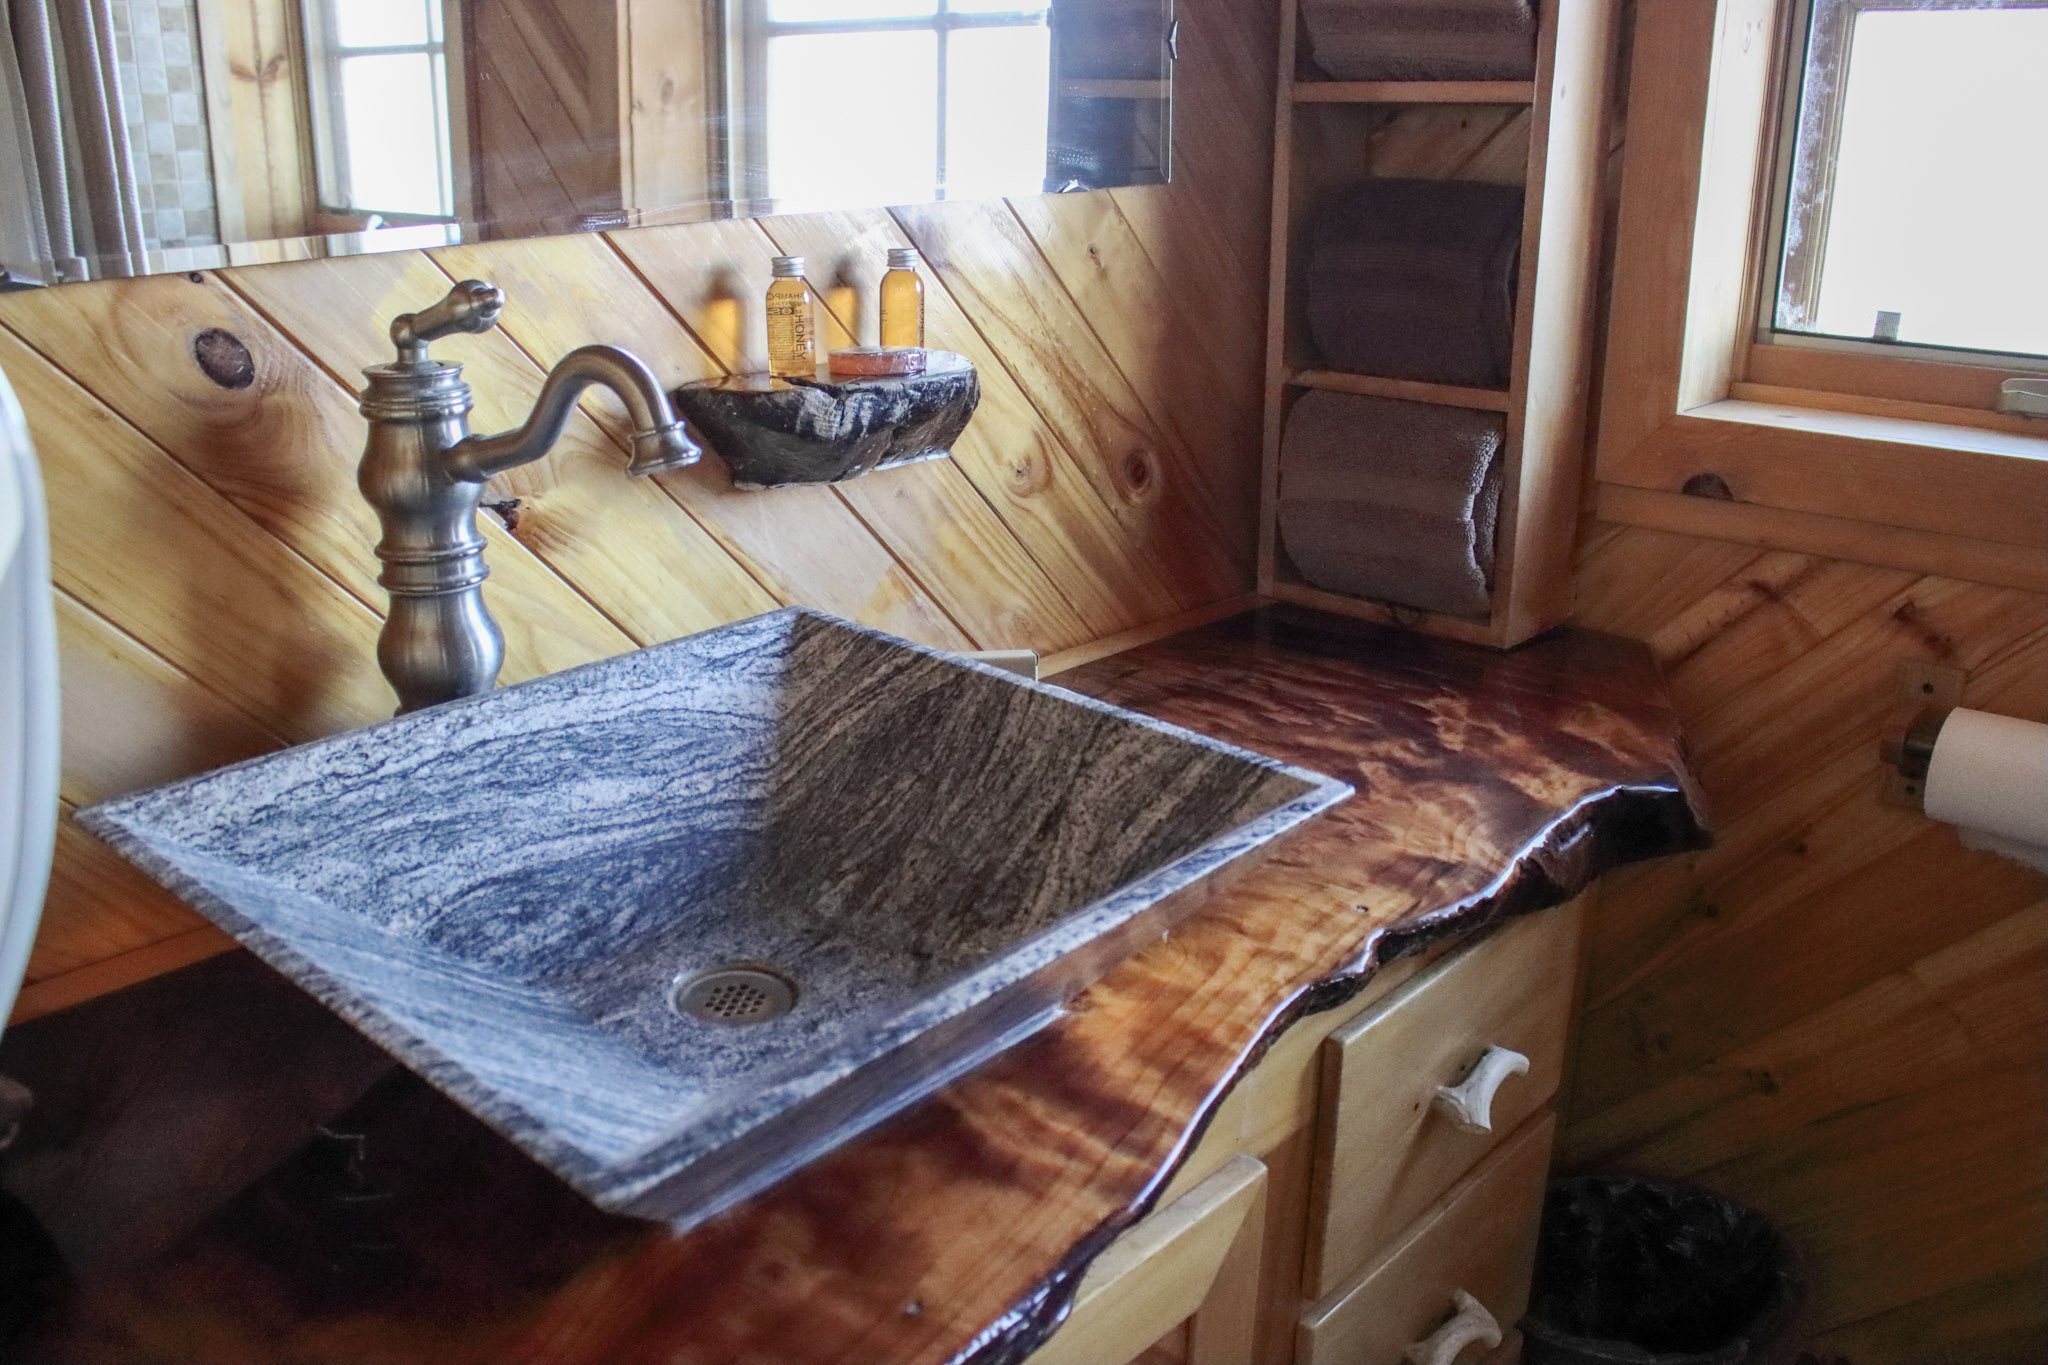 3-granite sink cabin 24.jpg